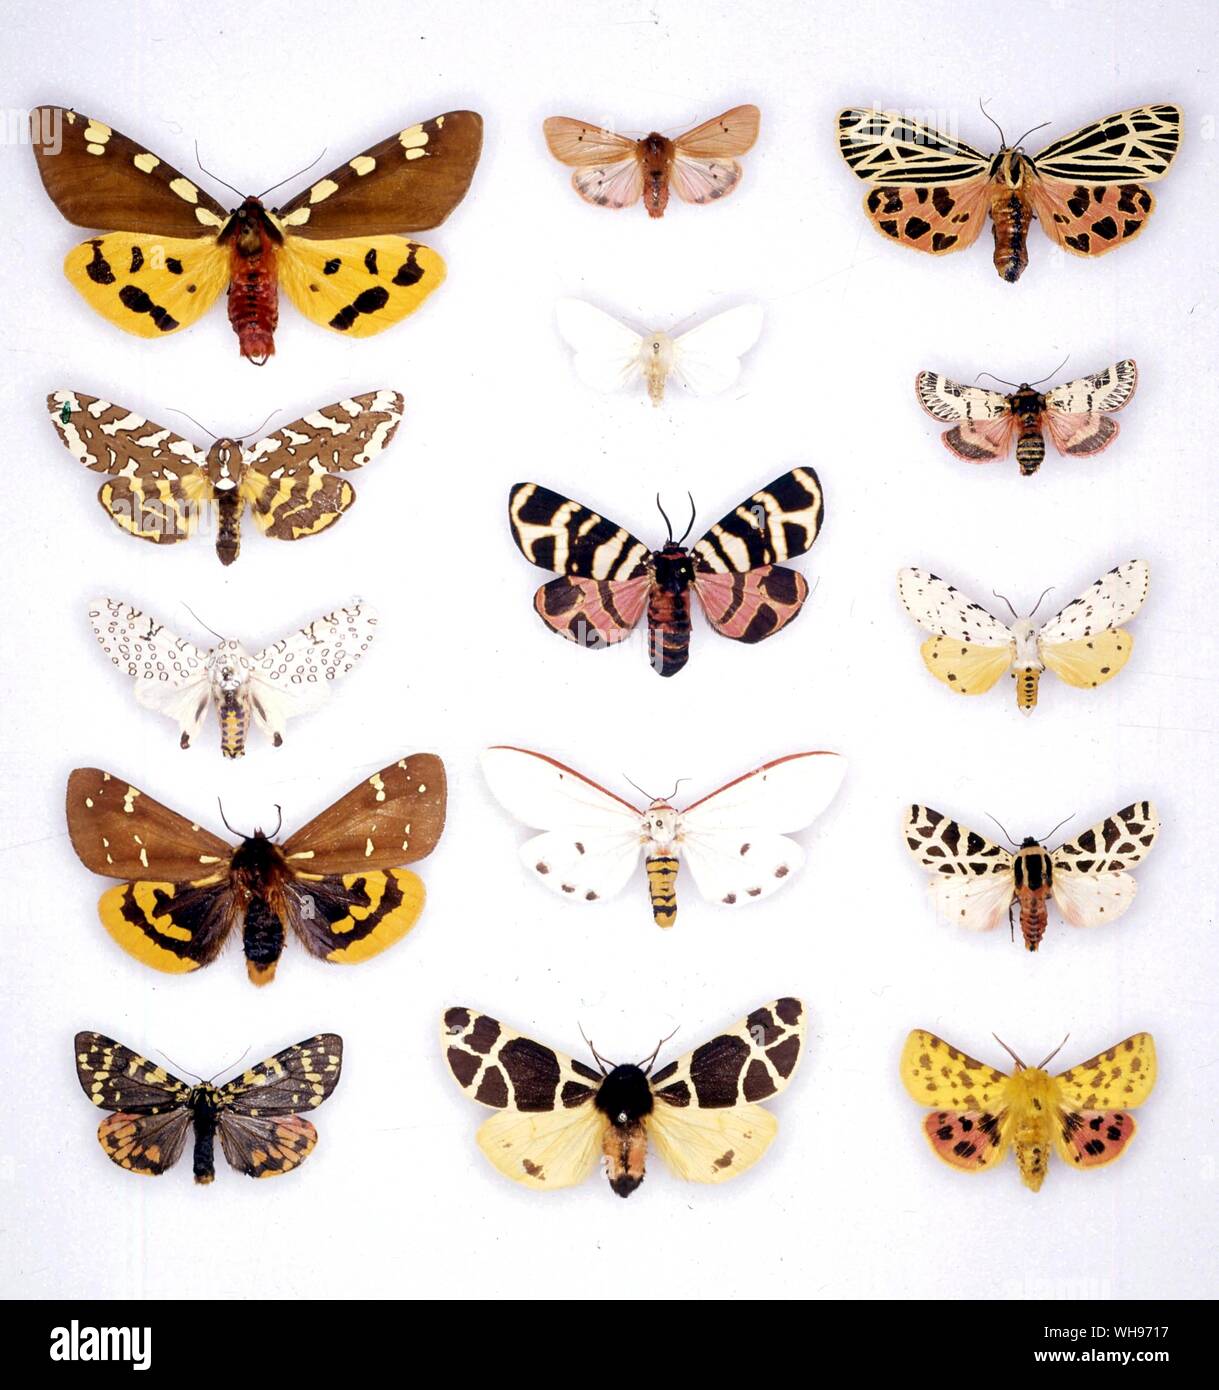 Butterflies/moths - (left to right) Pericallia matronula, Phragmatobia fuliginosa, Apantesis virgo, Arachnis zuni, Hyphantria cunea, Chlanidophora patagiata, Ecpantheria decora, Ammobiota festiva, Estigmene acrea, Platarctia parthenos, Amsacta lactinea, Cymbalophora pudica, Acerbia alpina, Arctia flavia, Diacrisia purpurata Stock Photo